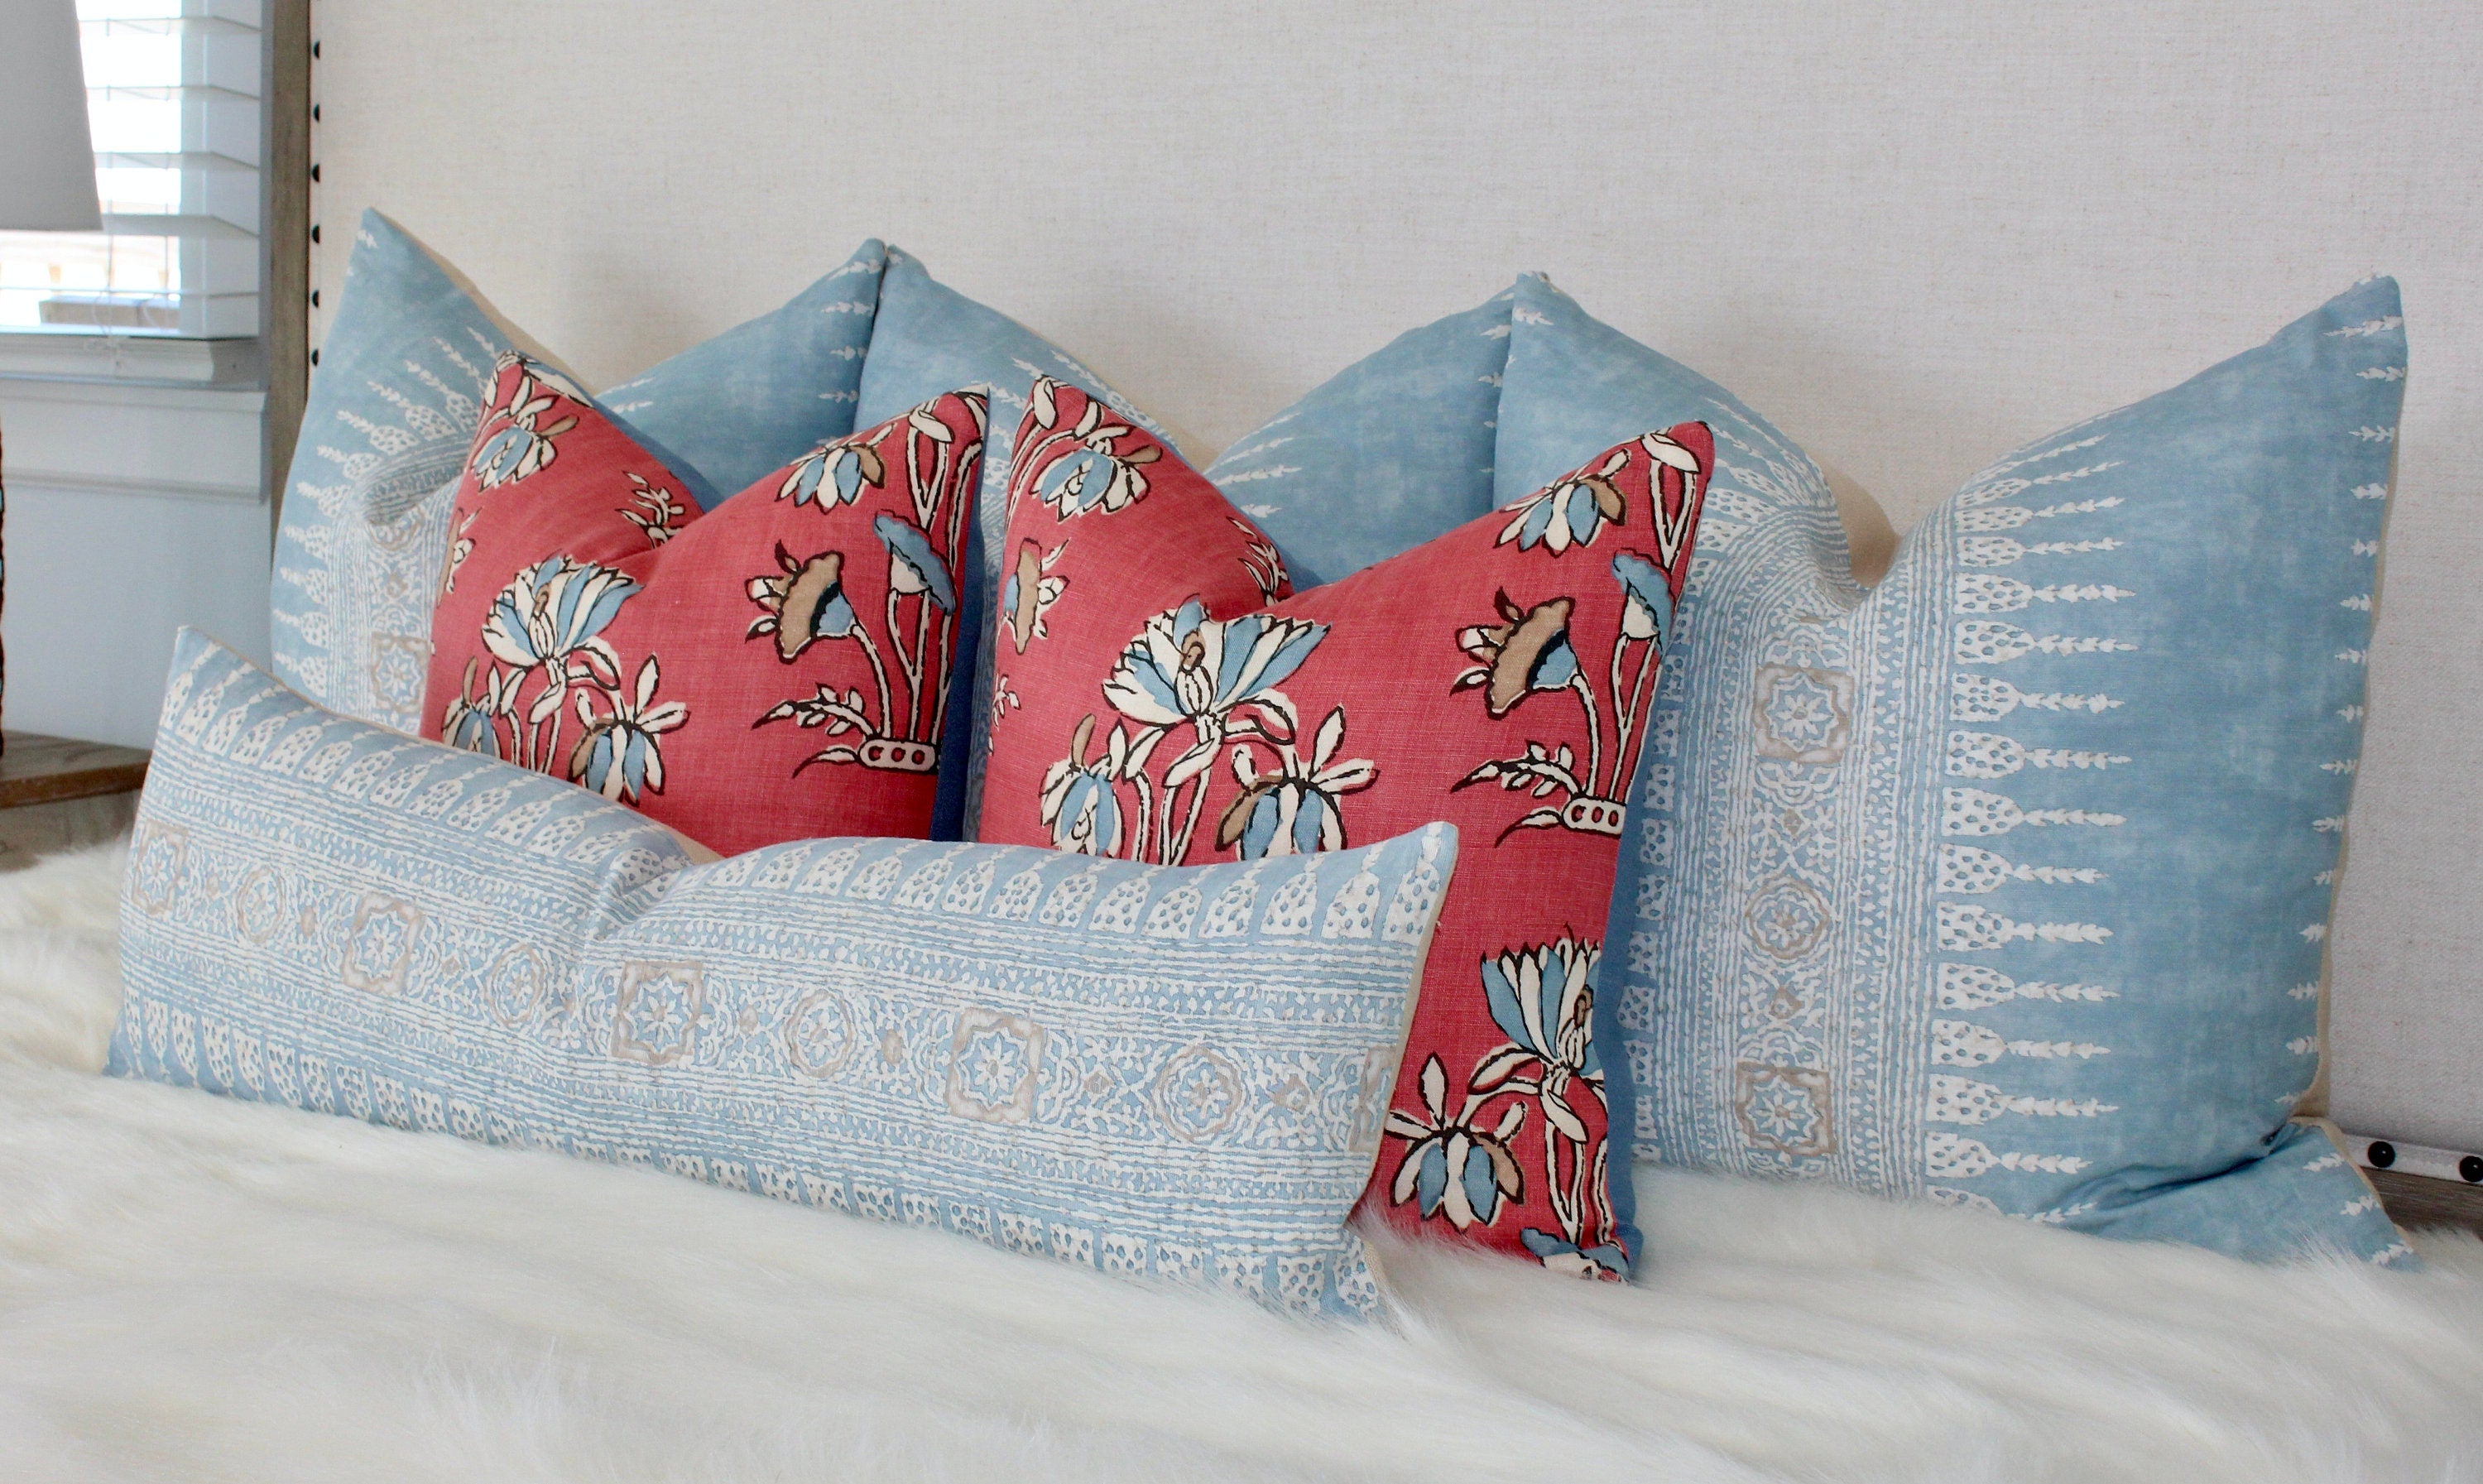 Thibaut Javanese Stripe Pillow Aqua Blue. Long Lumbar Pillow, Spa Blue Pillow, Designer Fabric Pillow, Euro Sham Cushion, Striped Pillow